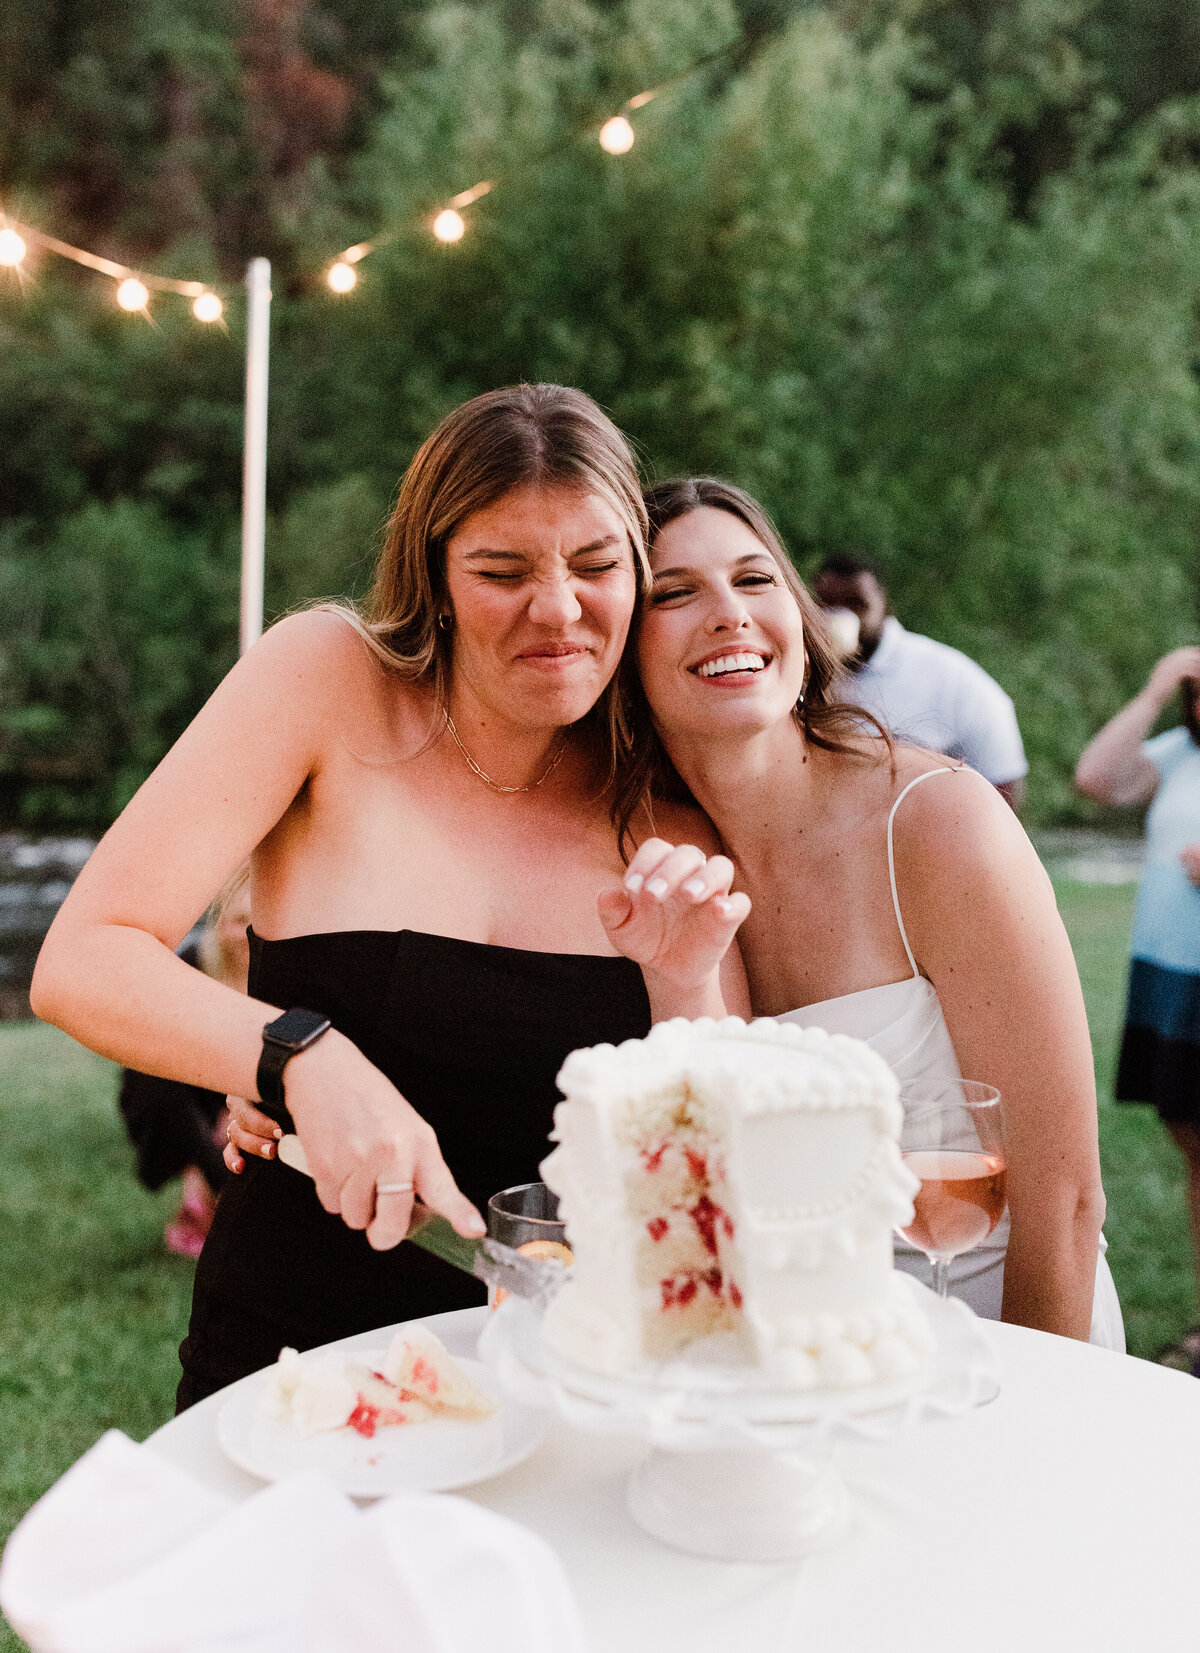 Woman cutting wedding cake at Dallenbach Ranch Wedding reception Colorado